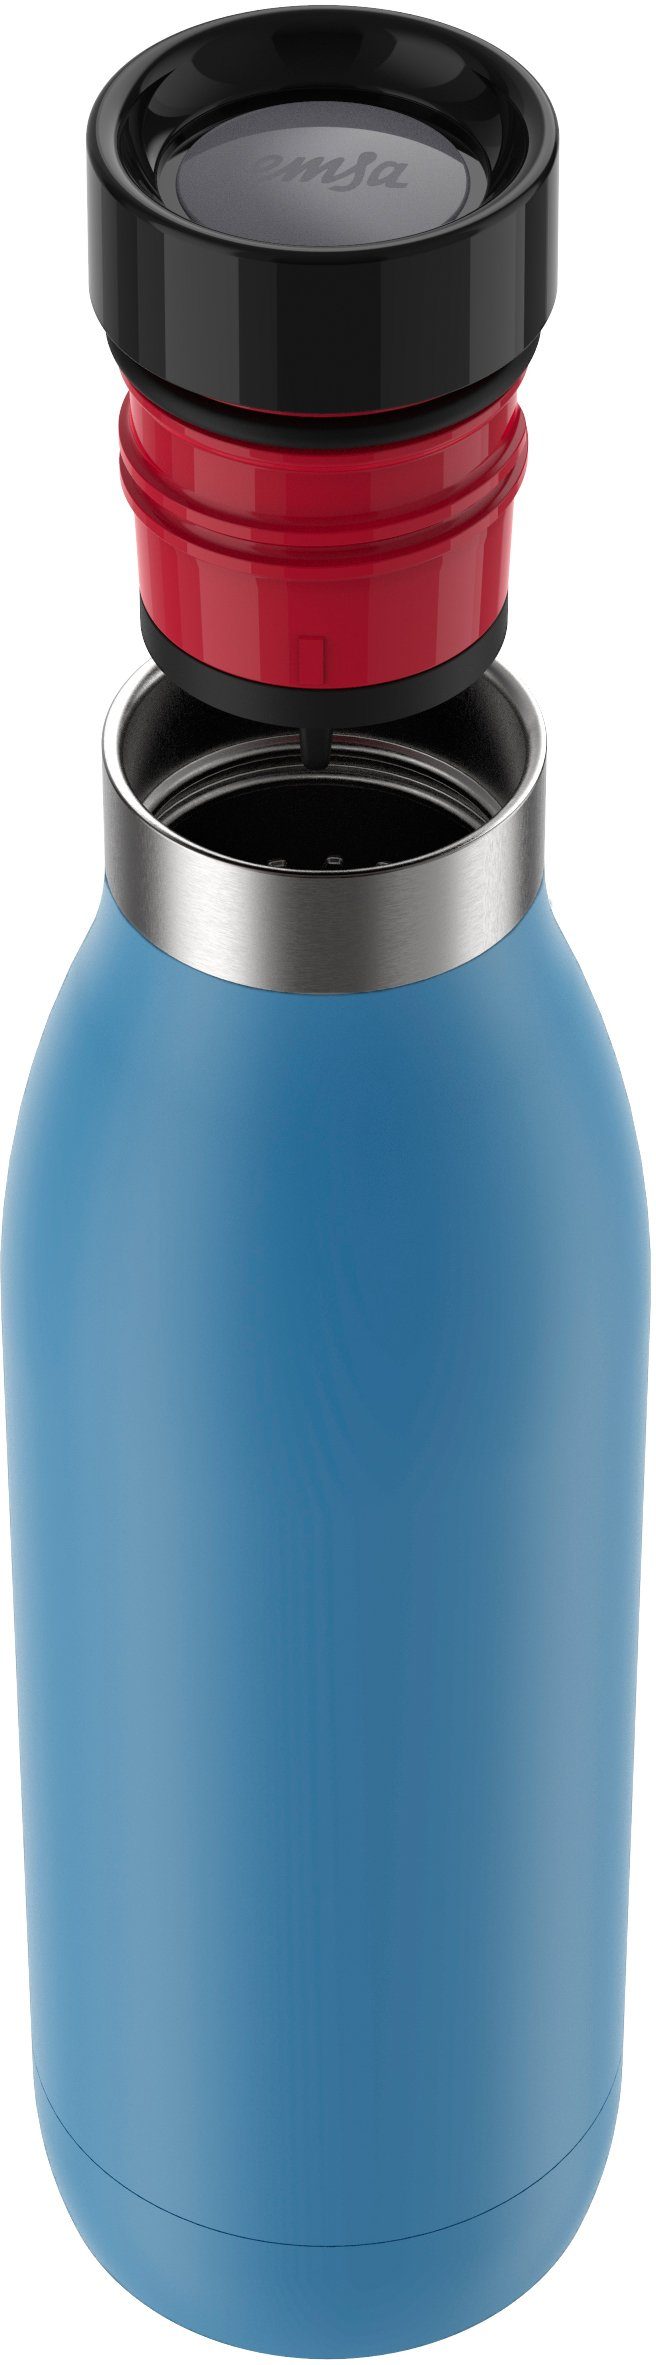 Emsa Trinkflasche Bludrop aquablau Edelstahl, Color, 12h spülmaschinenfest Quick-Press Deckel, warm/24h kühl